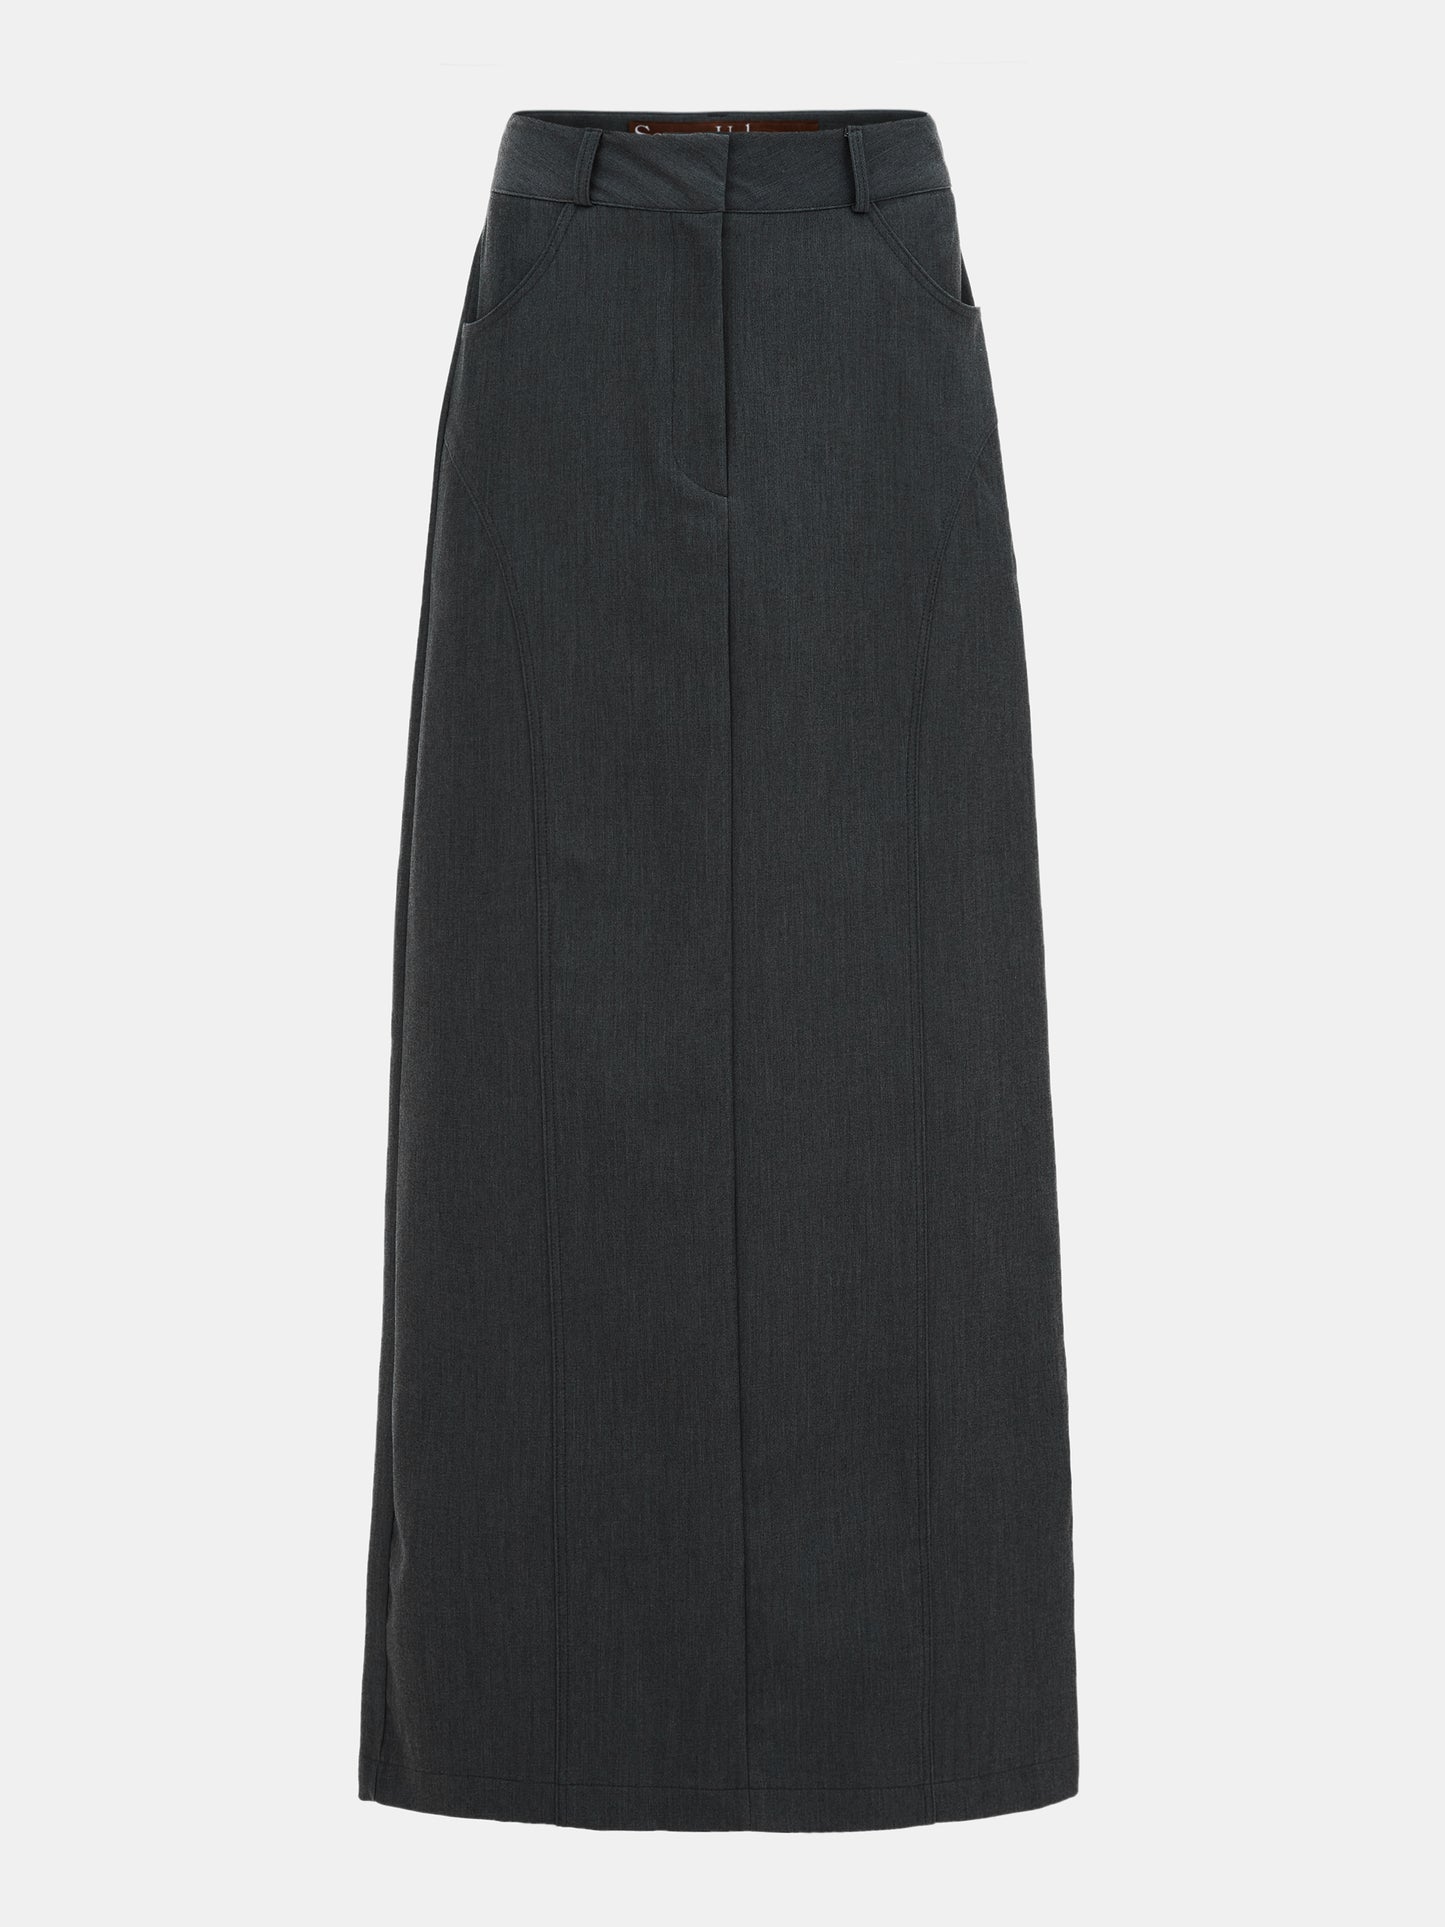 Galliga Long Pencil Skirt, Charcoal